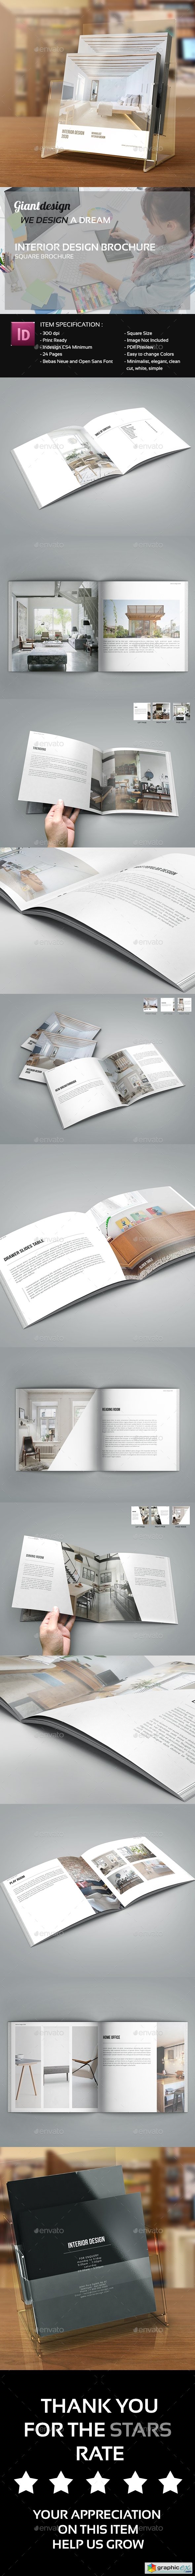 Interior Design - Square Brochure Catalog